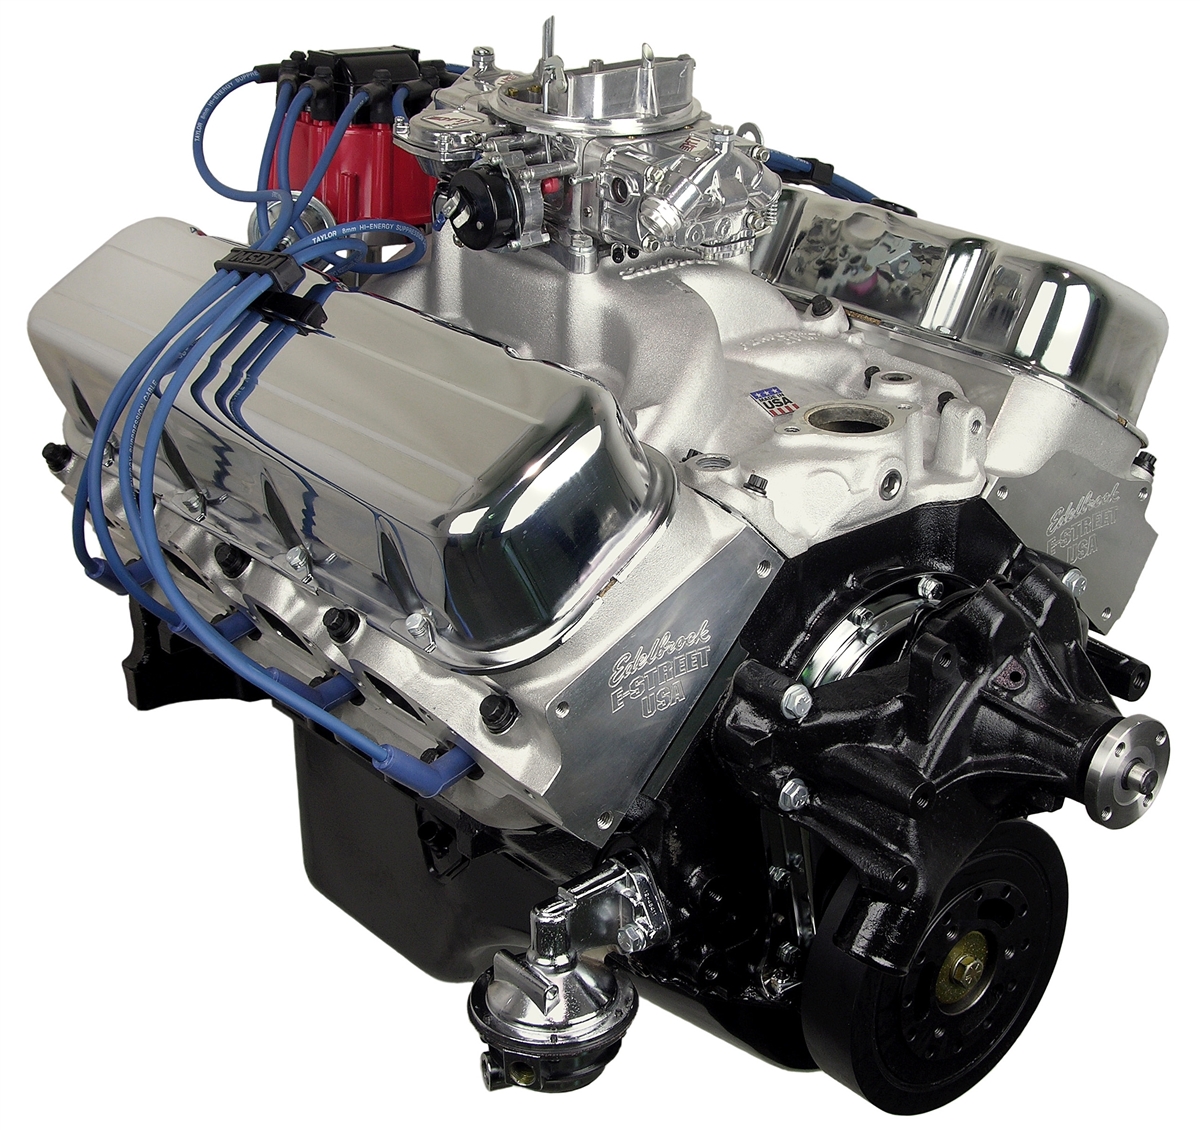 High Performance Crate Engine Big Block Chevy 489ci / 565HP / 595TQ